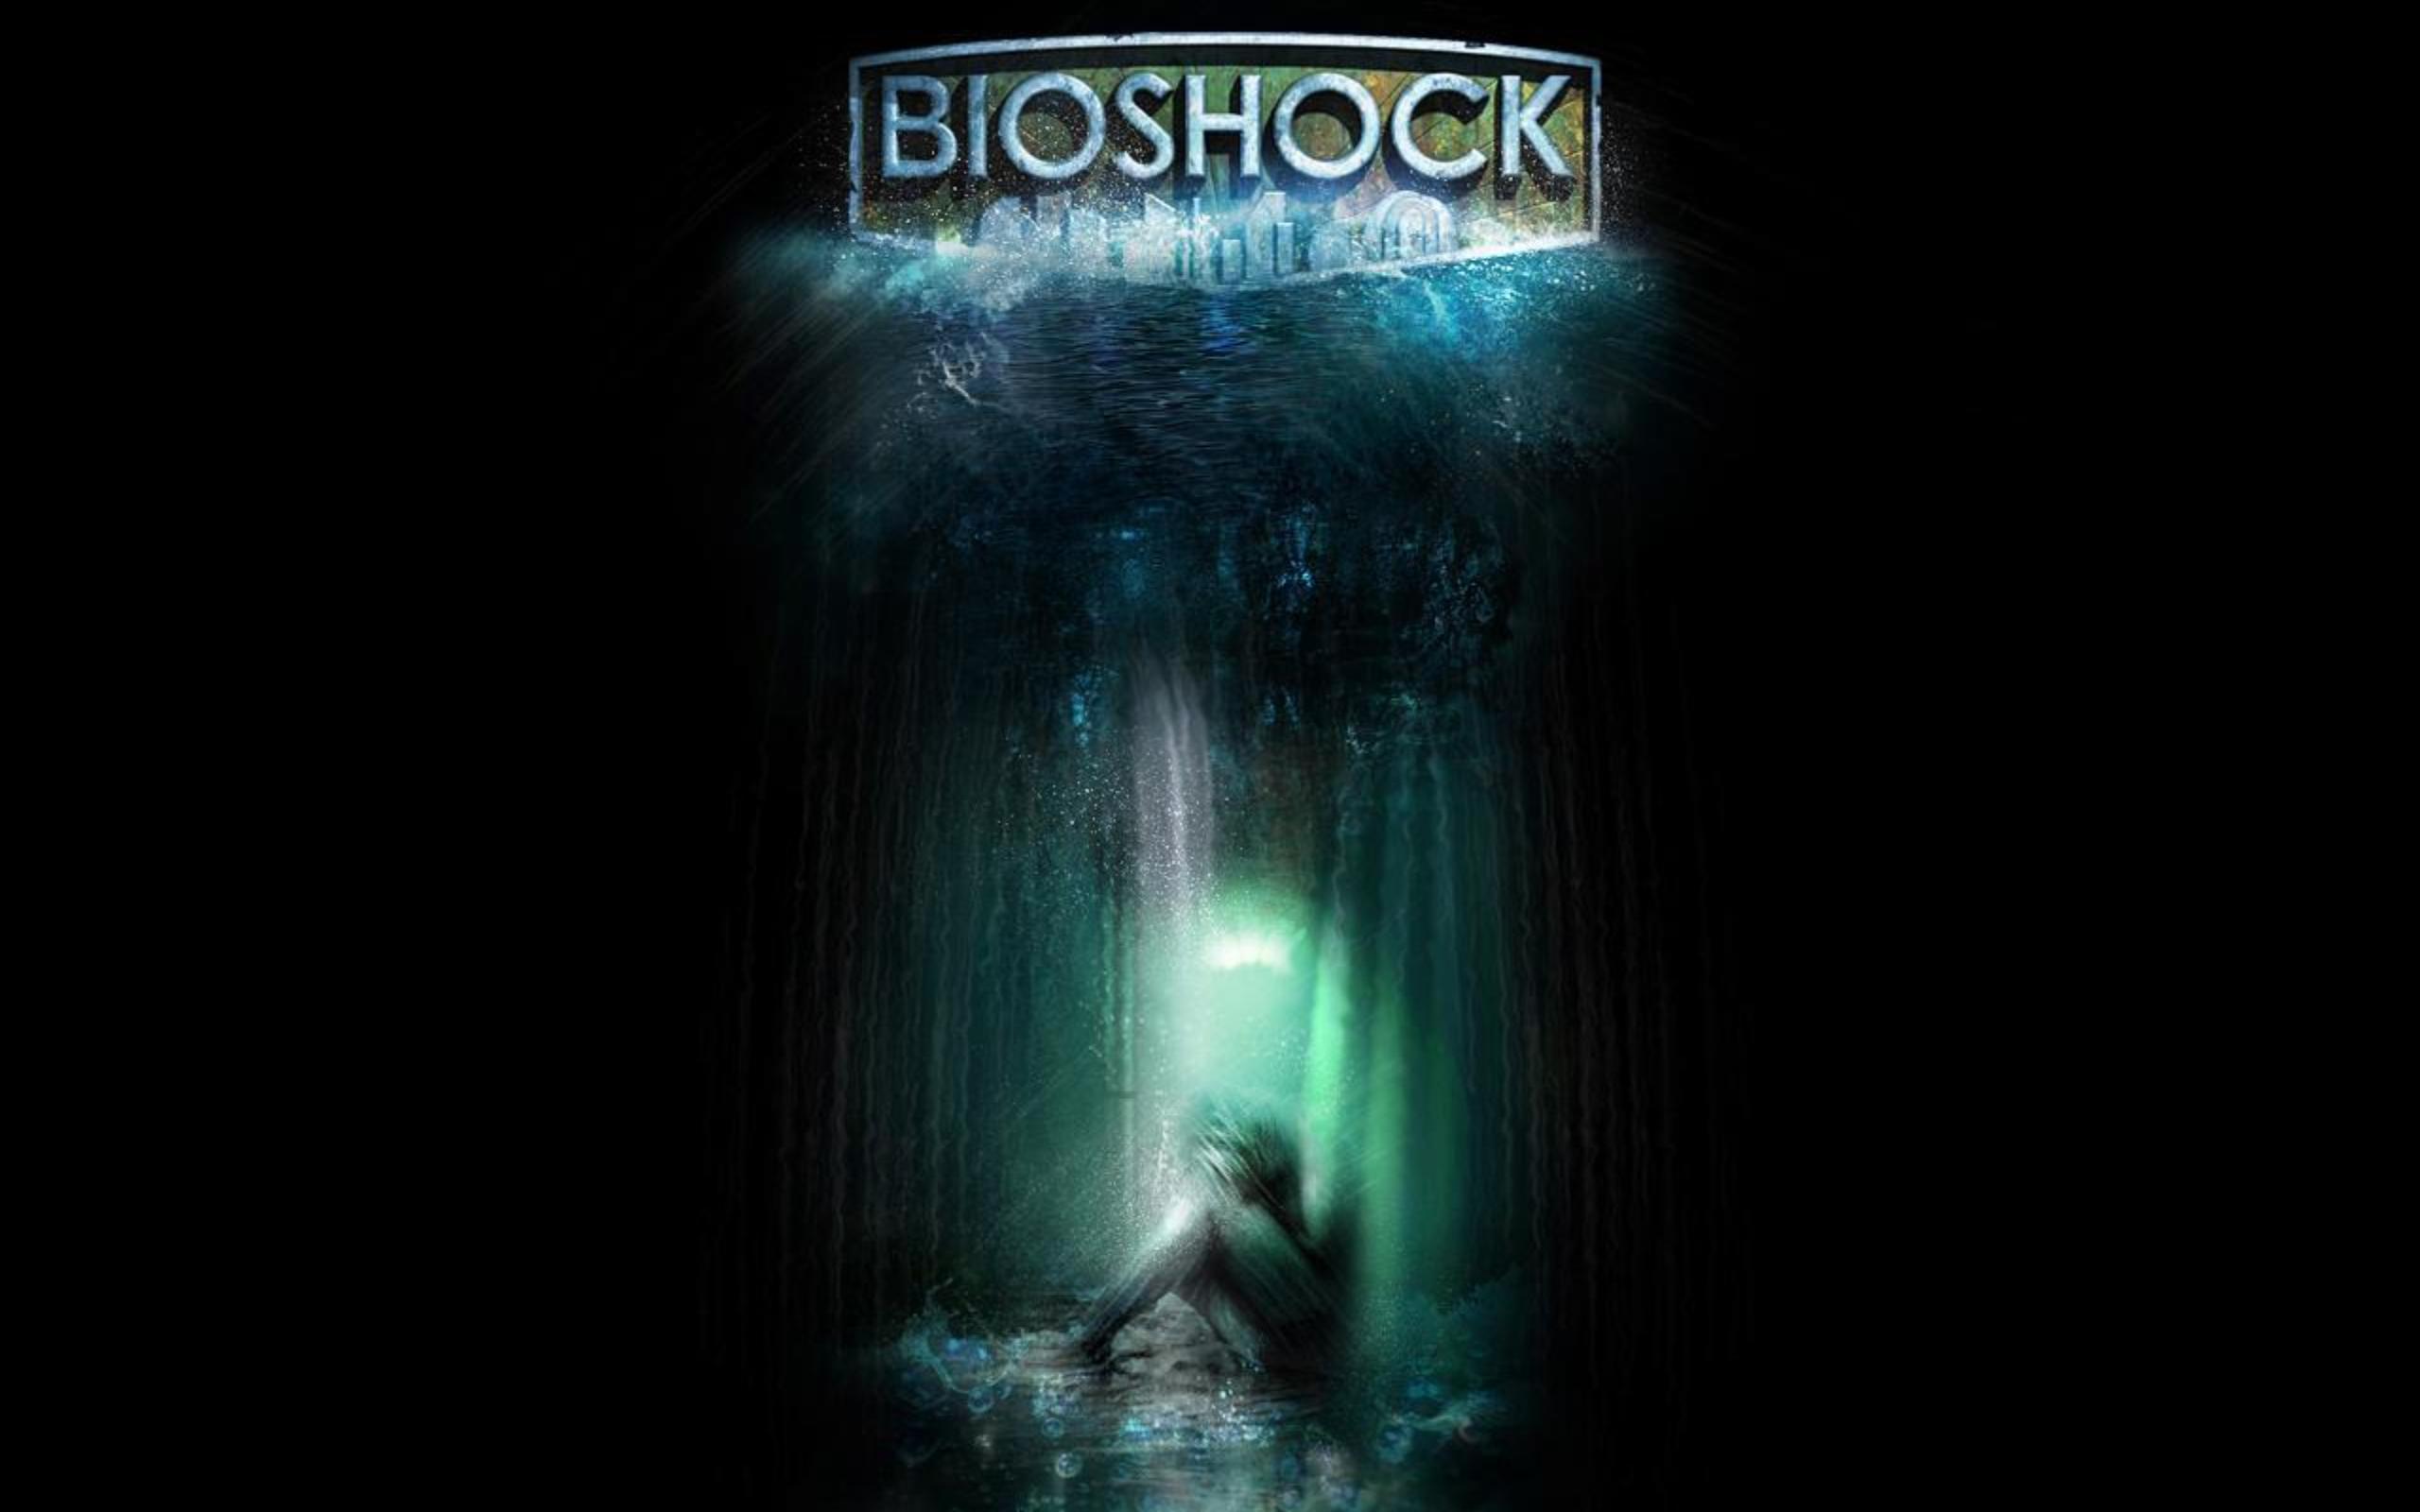 Bioshock Computer Wallpaper, Desktop Background 2560x1600 Id: 120842